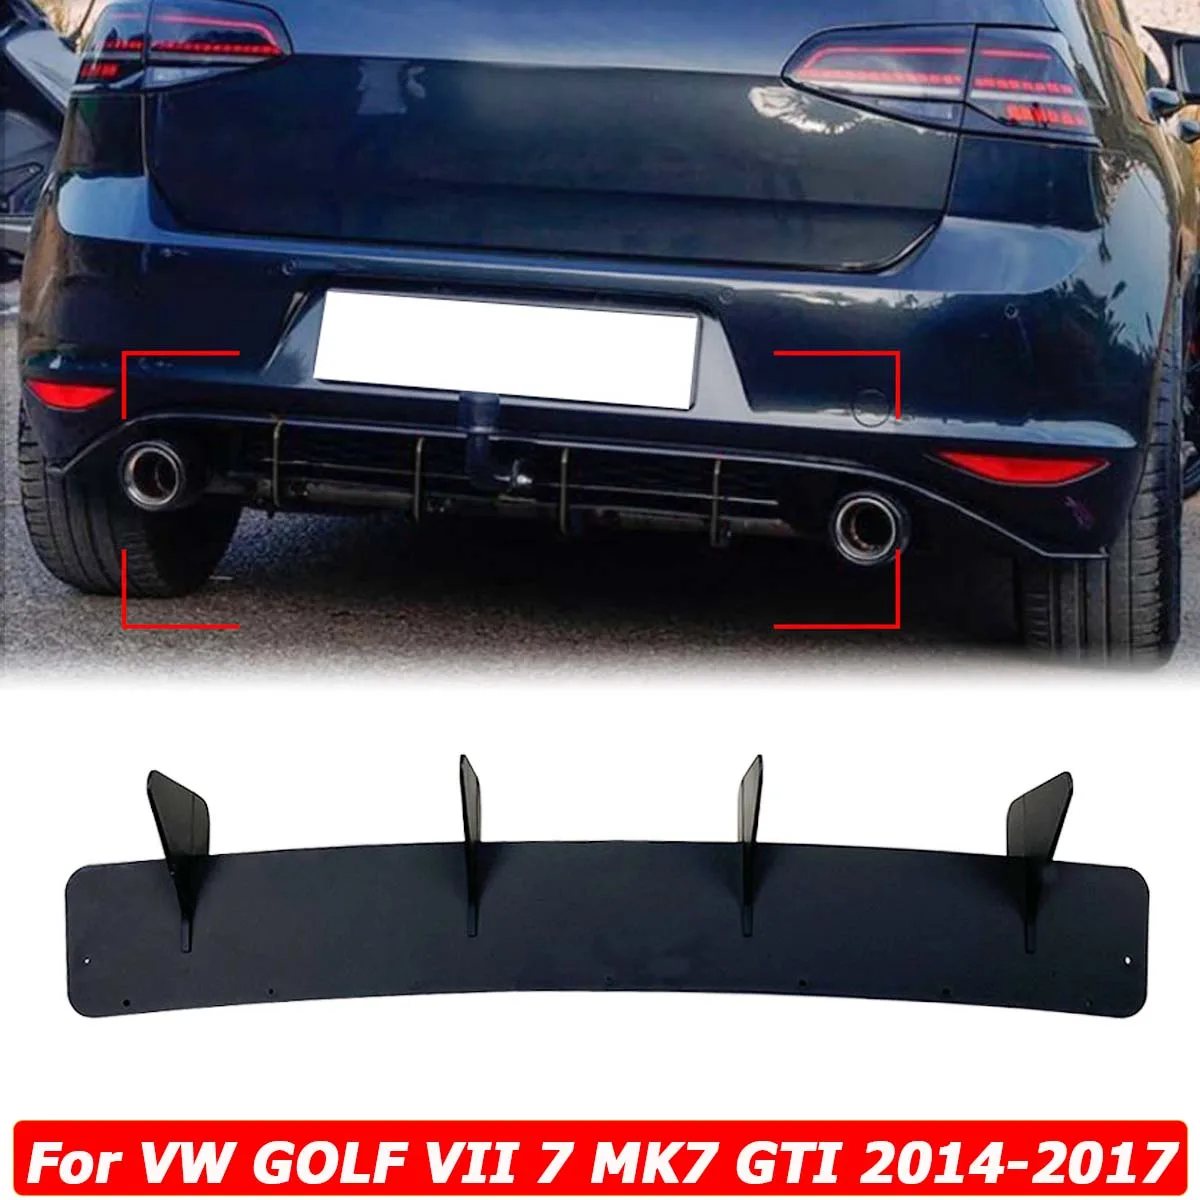 

For Volkswagen VW GOLF VII 7 MK7 GTI 2014-2017 Rear Bumper Diffuser Splitter Valance Spoiler Lip Body Kit Car Accessories